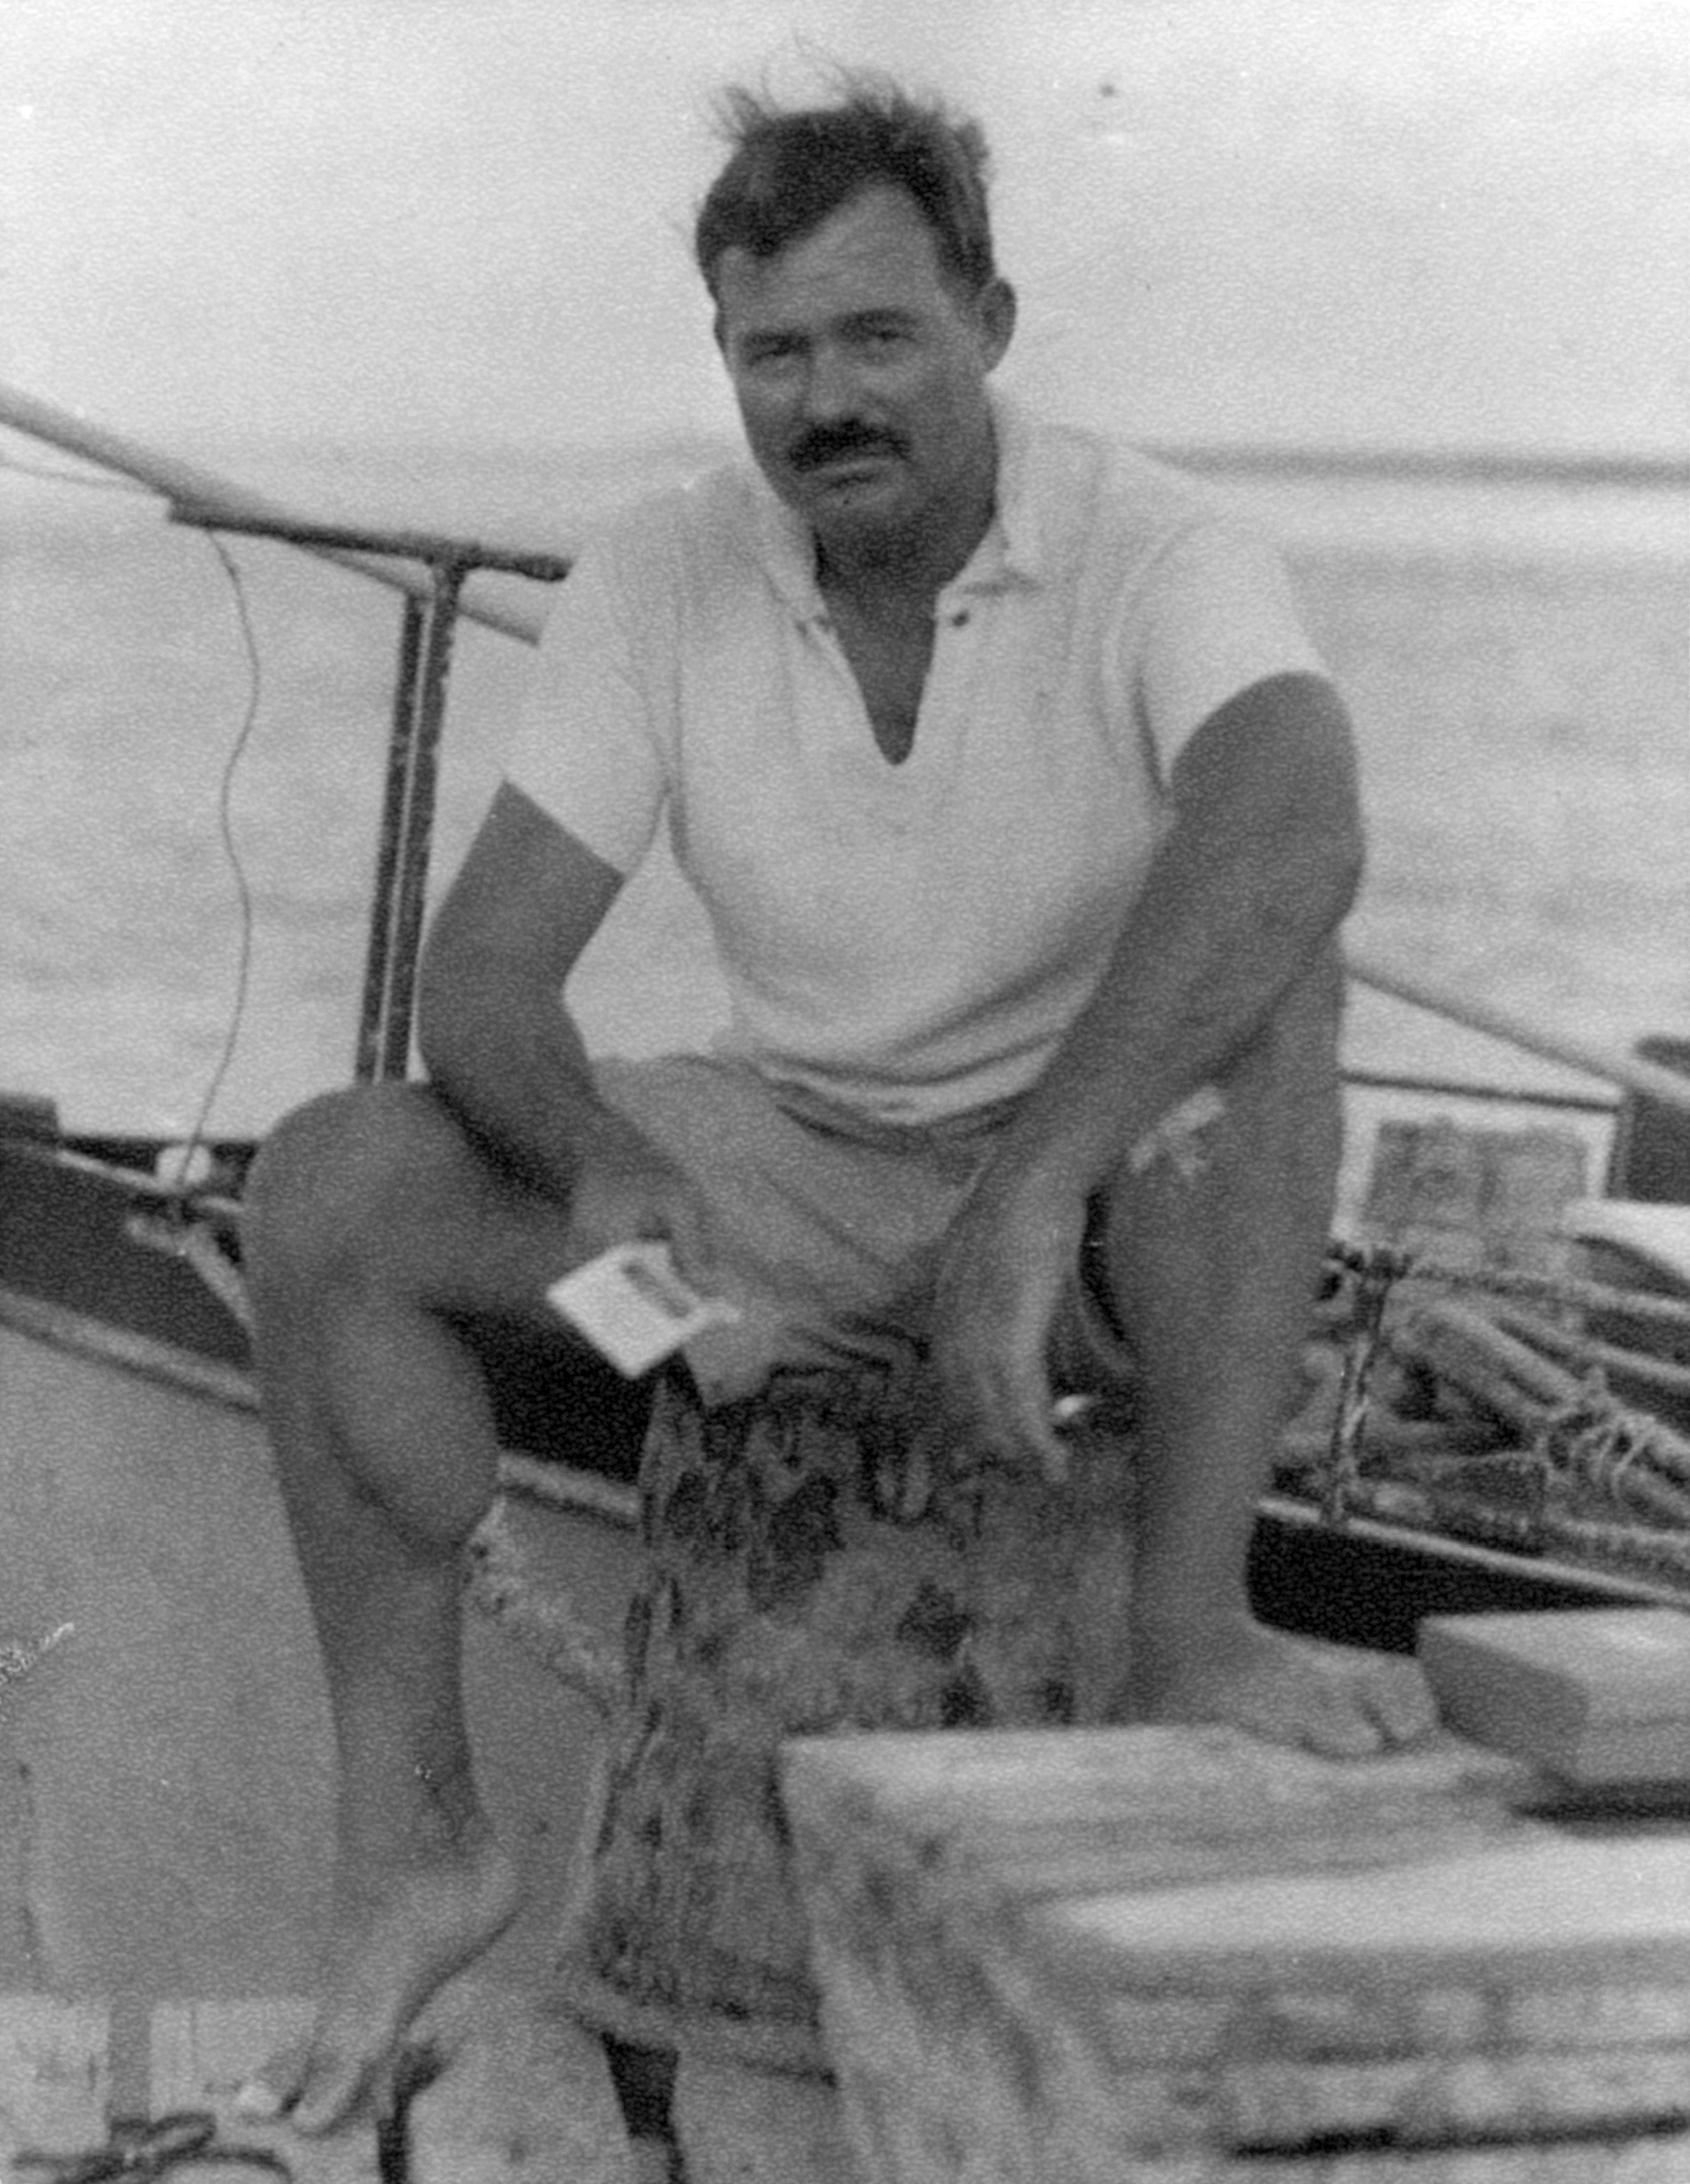 Vintage man sitting on a boat.